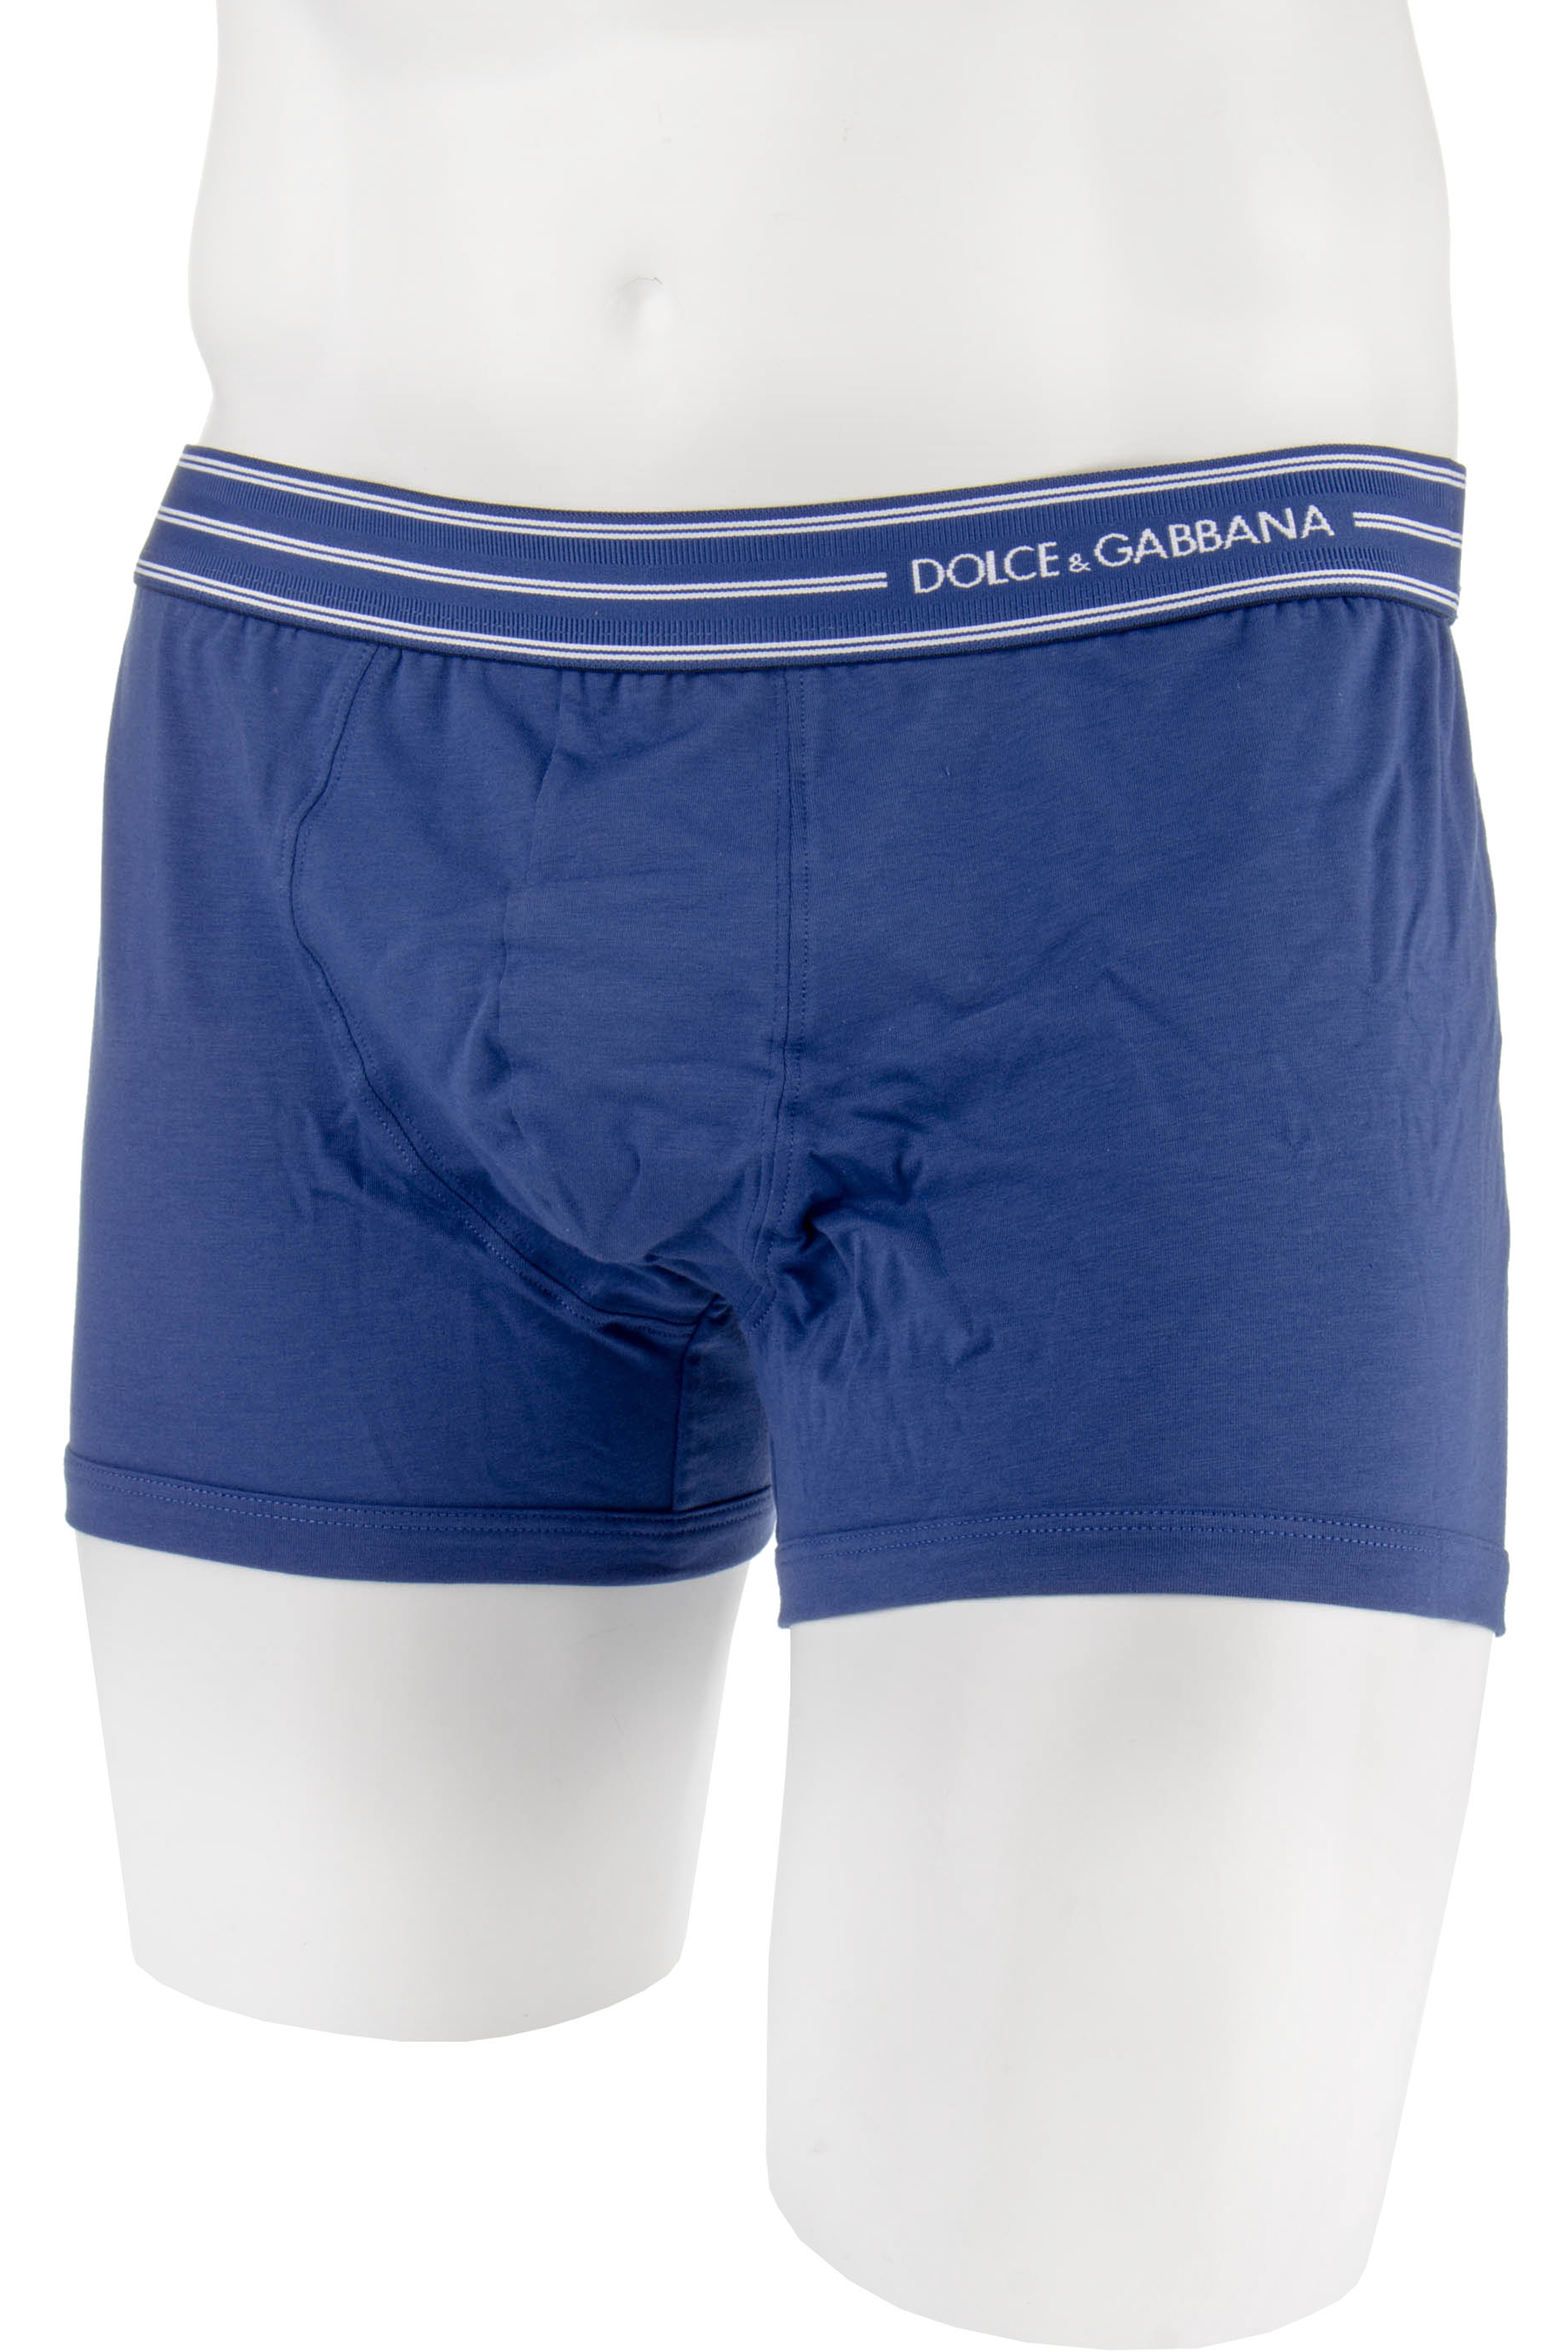 DOCLE & GABBANA Regular Boxer | Underwear | Clothing | Men | mientus ...